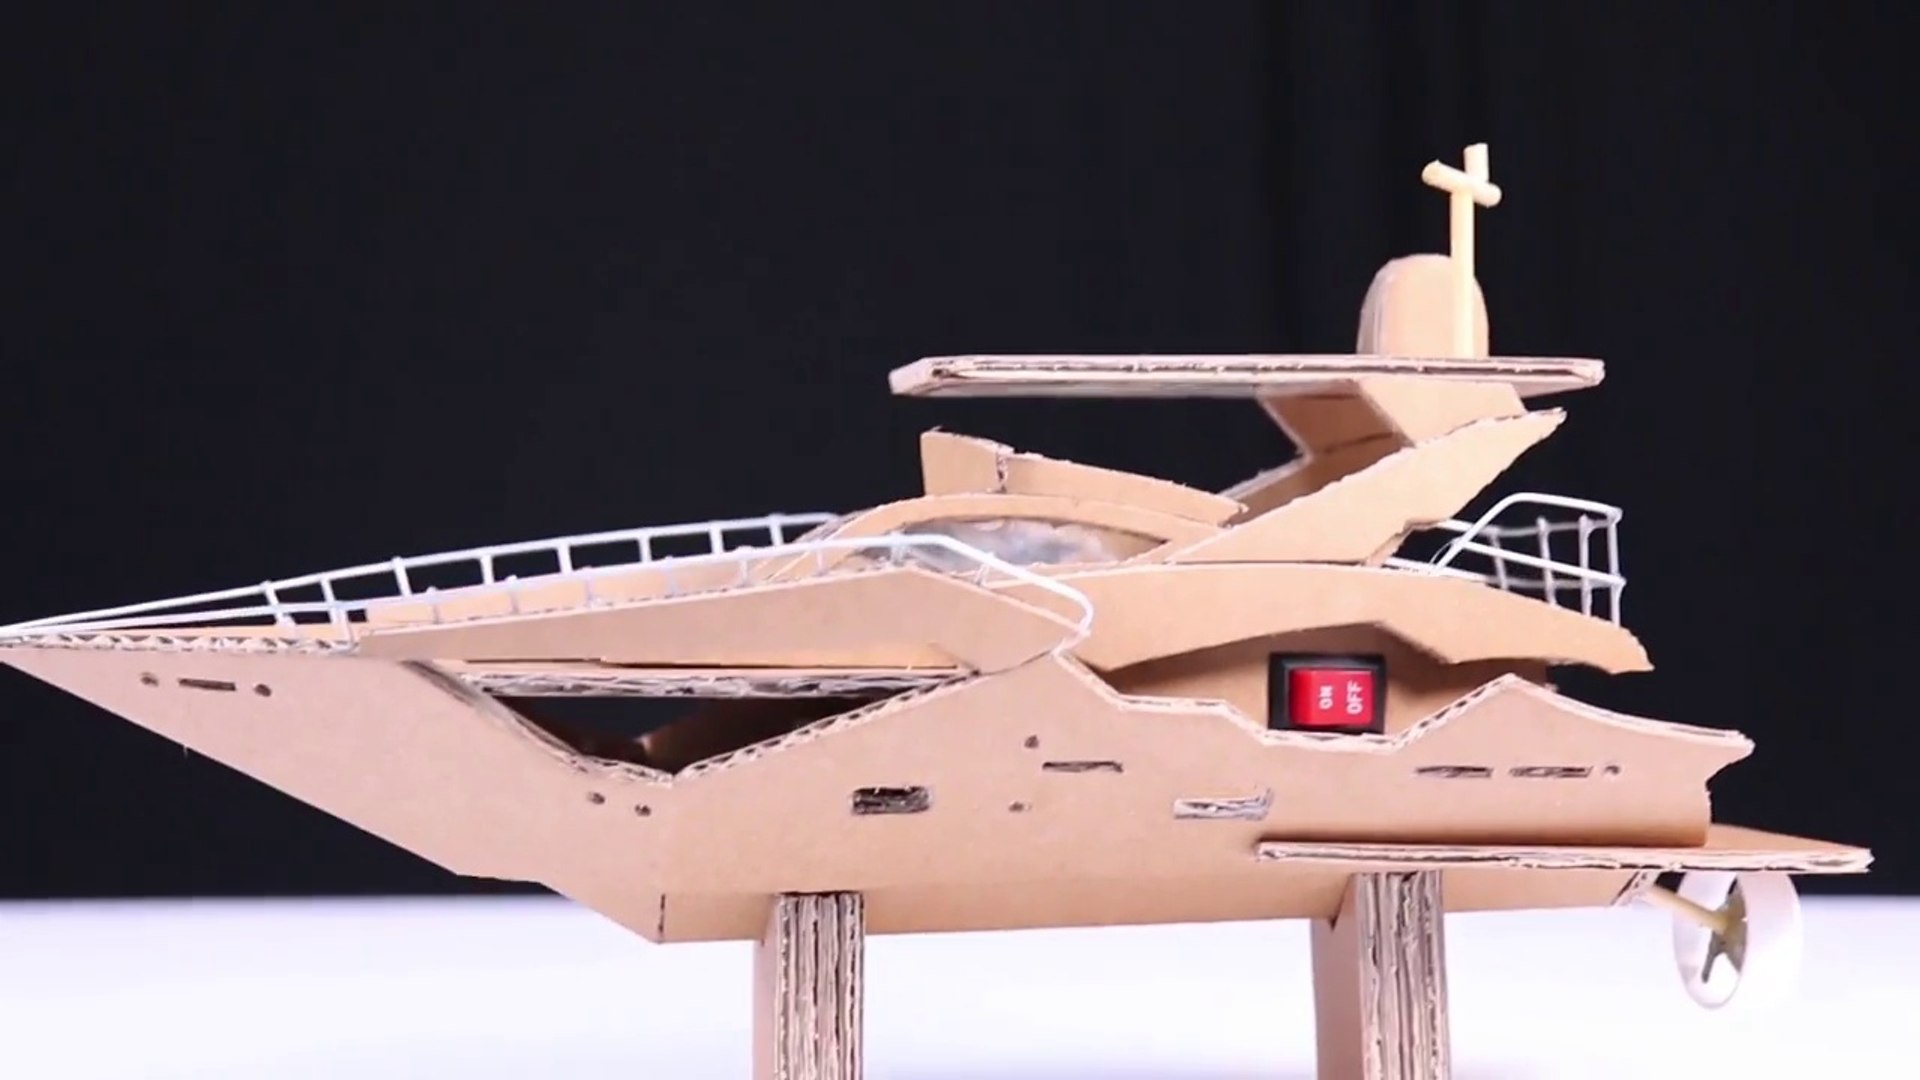 How to make boat (luxury Yacht) - Amazing Cardboard DIY